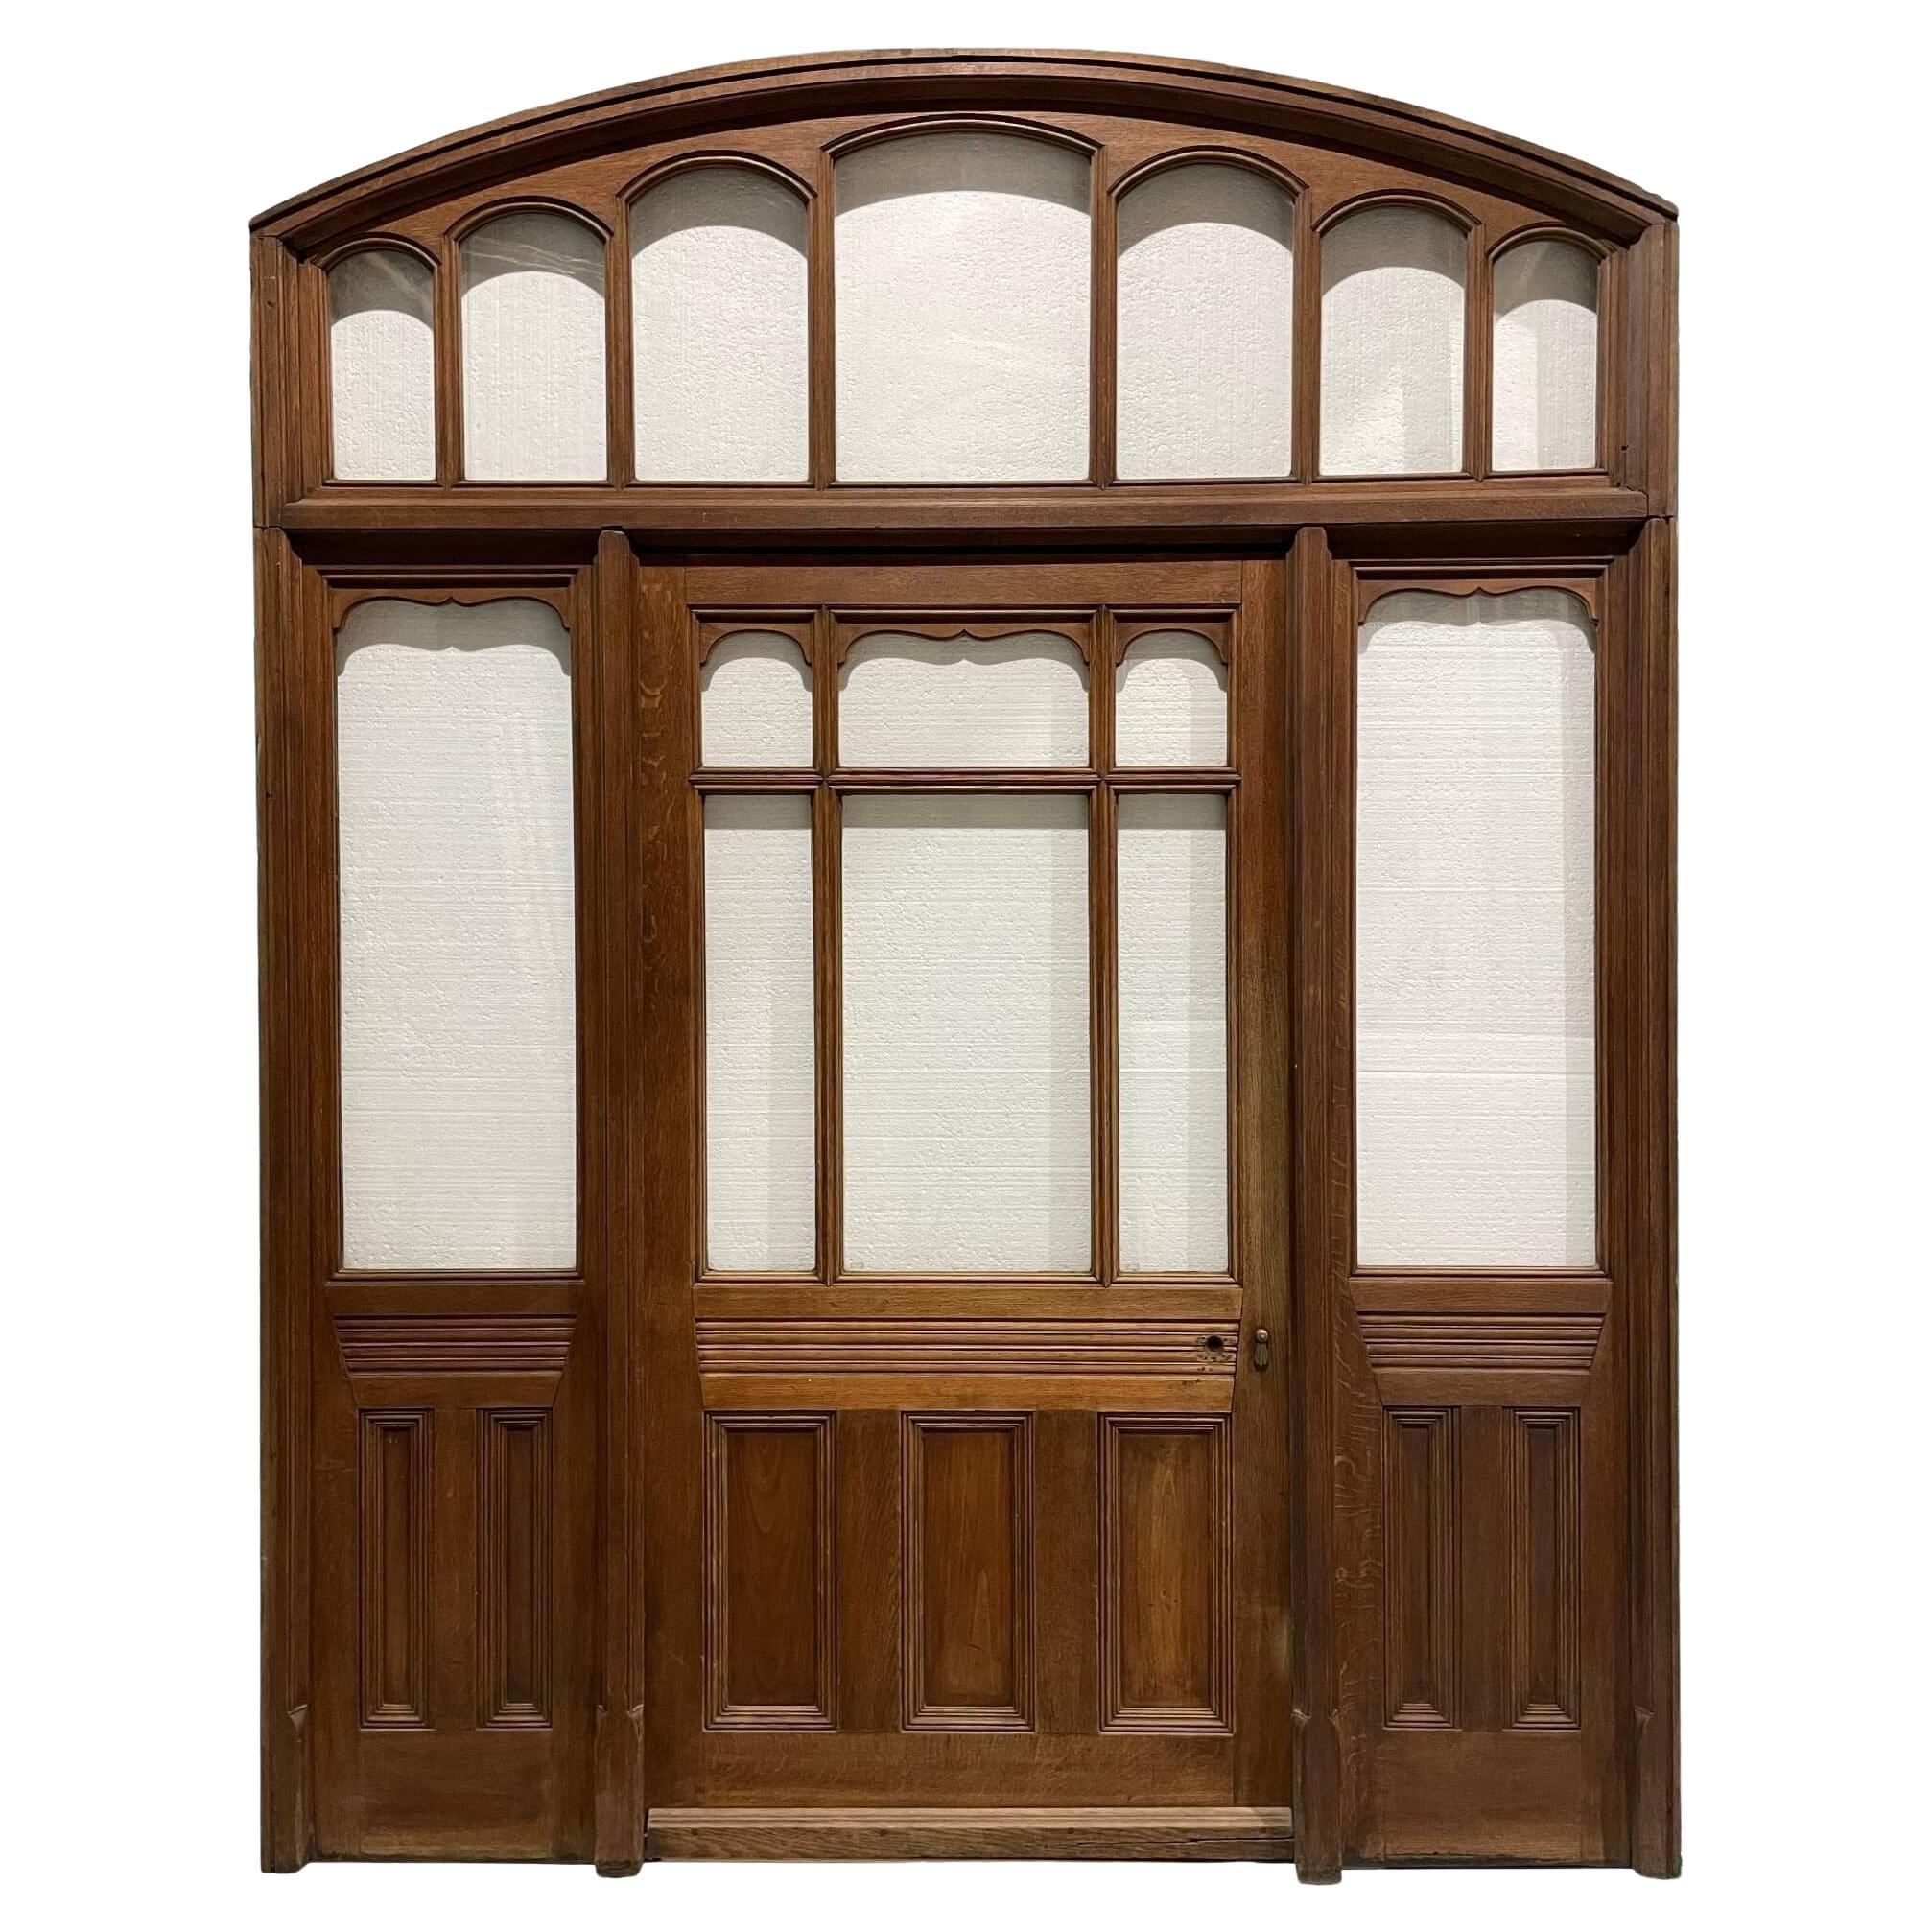 Victorian Glazed Oak Entranceway or Porch Door For Sale